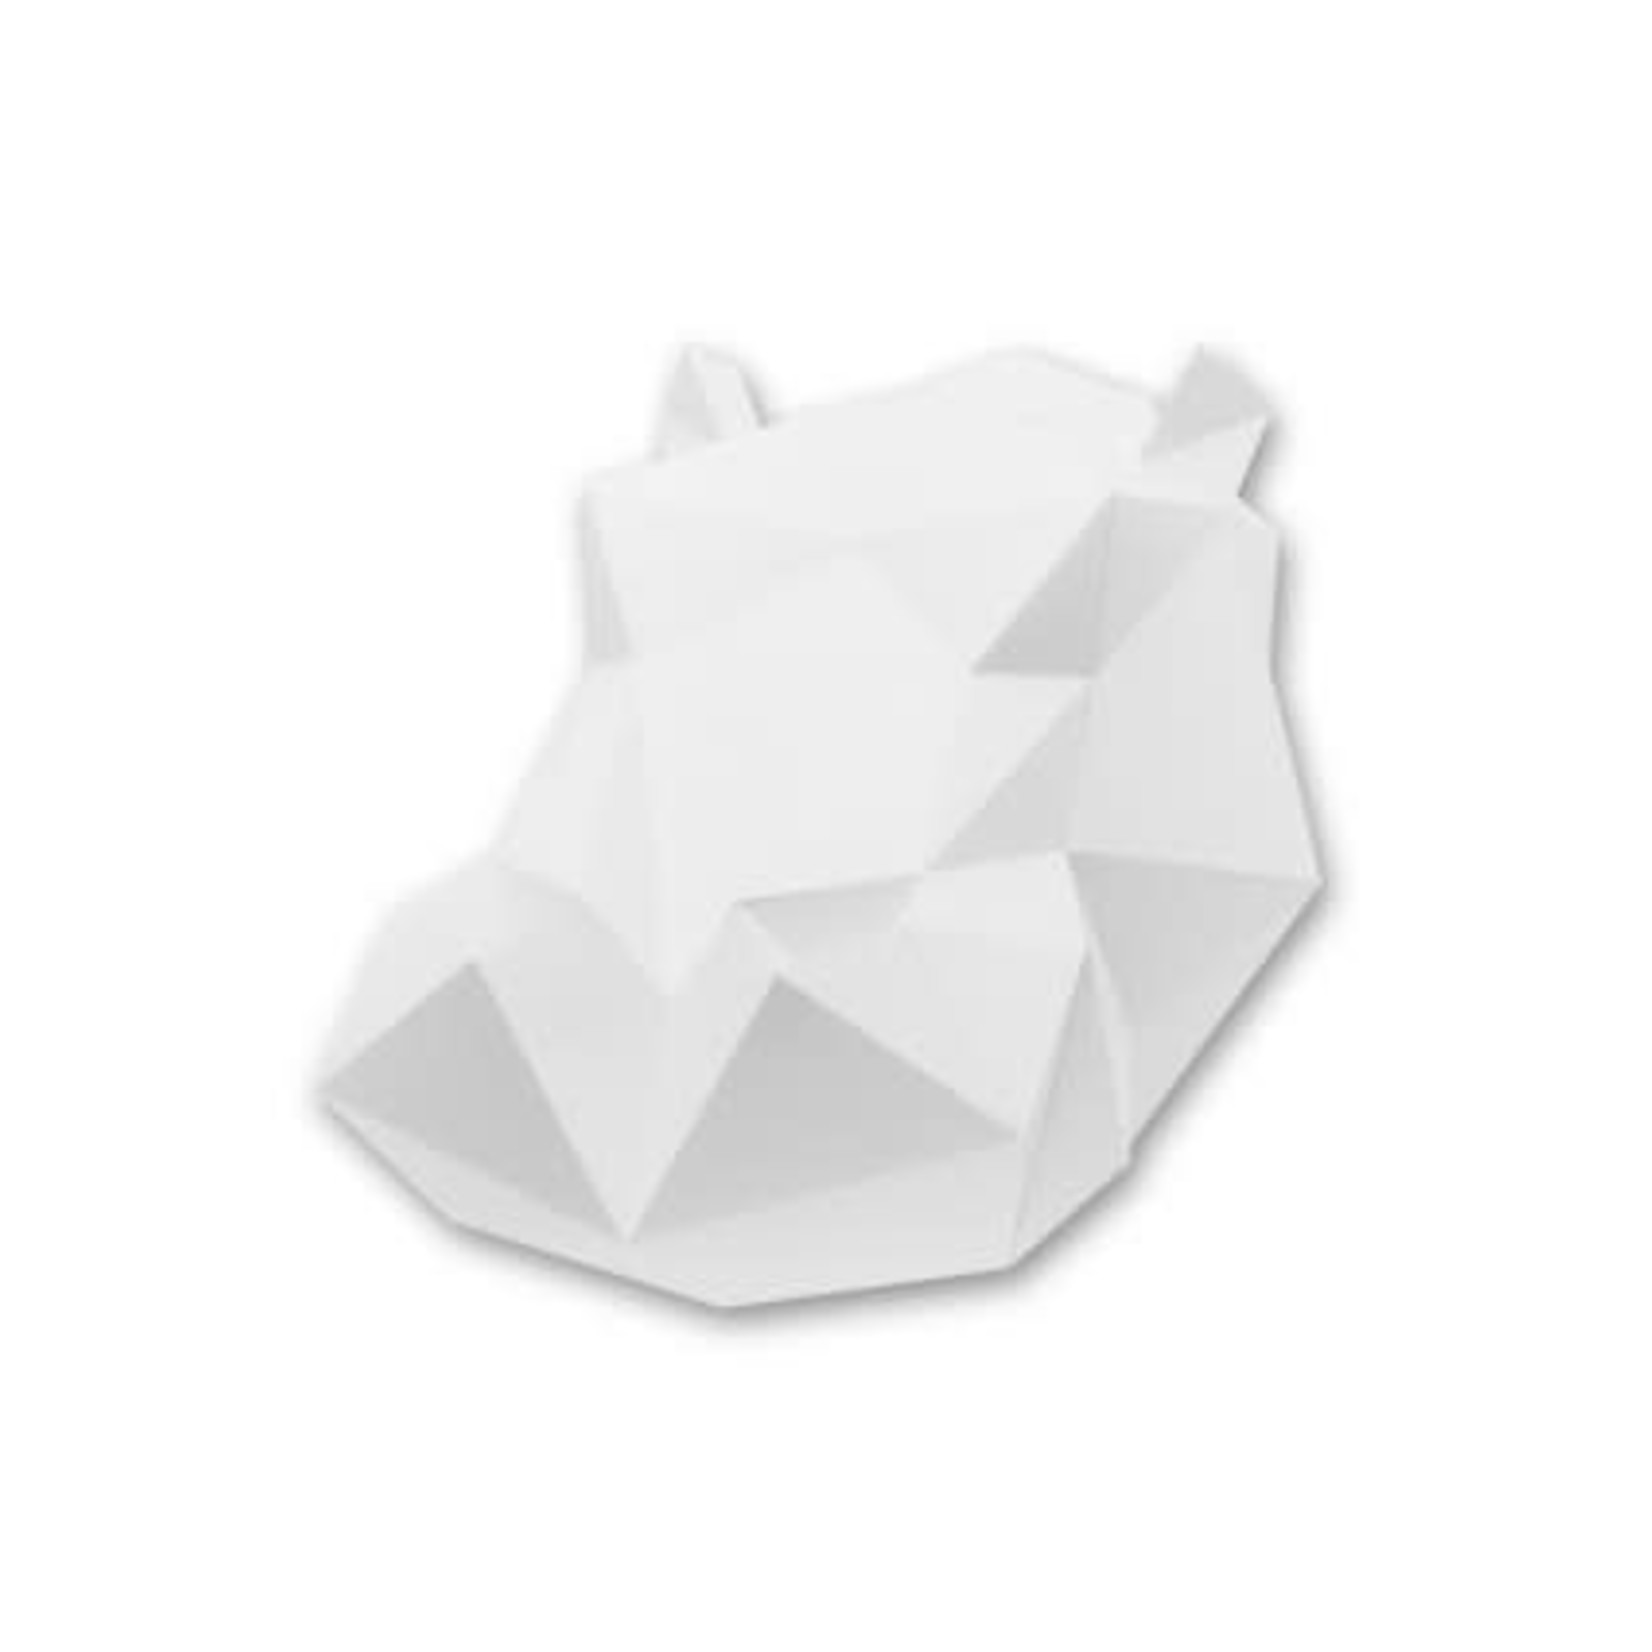 Assembli Assembli – Origami –  Hippo blanc